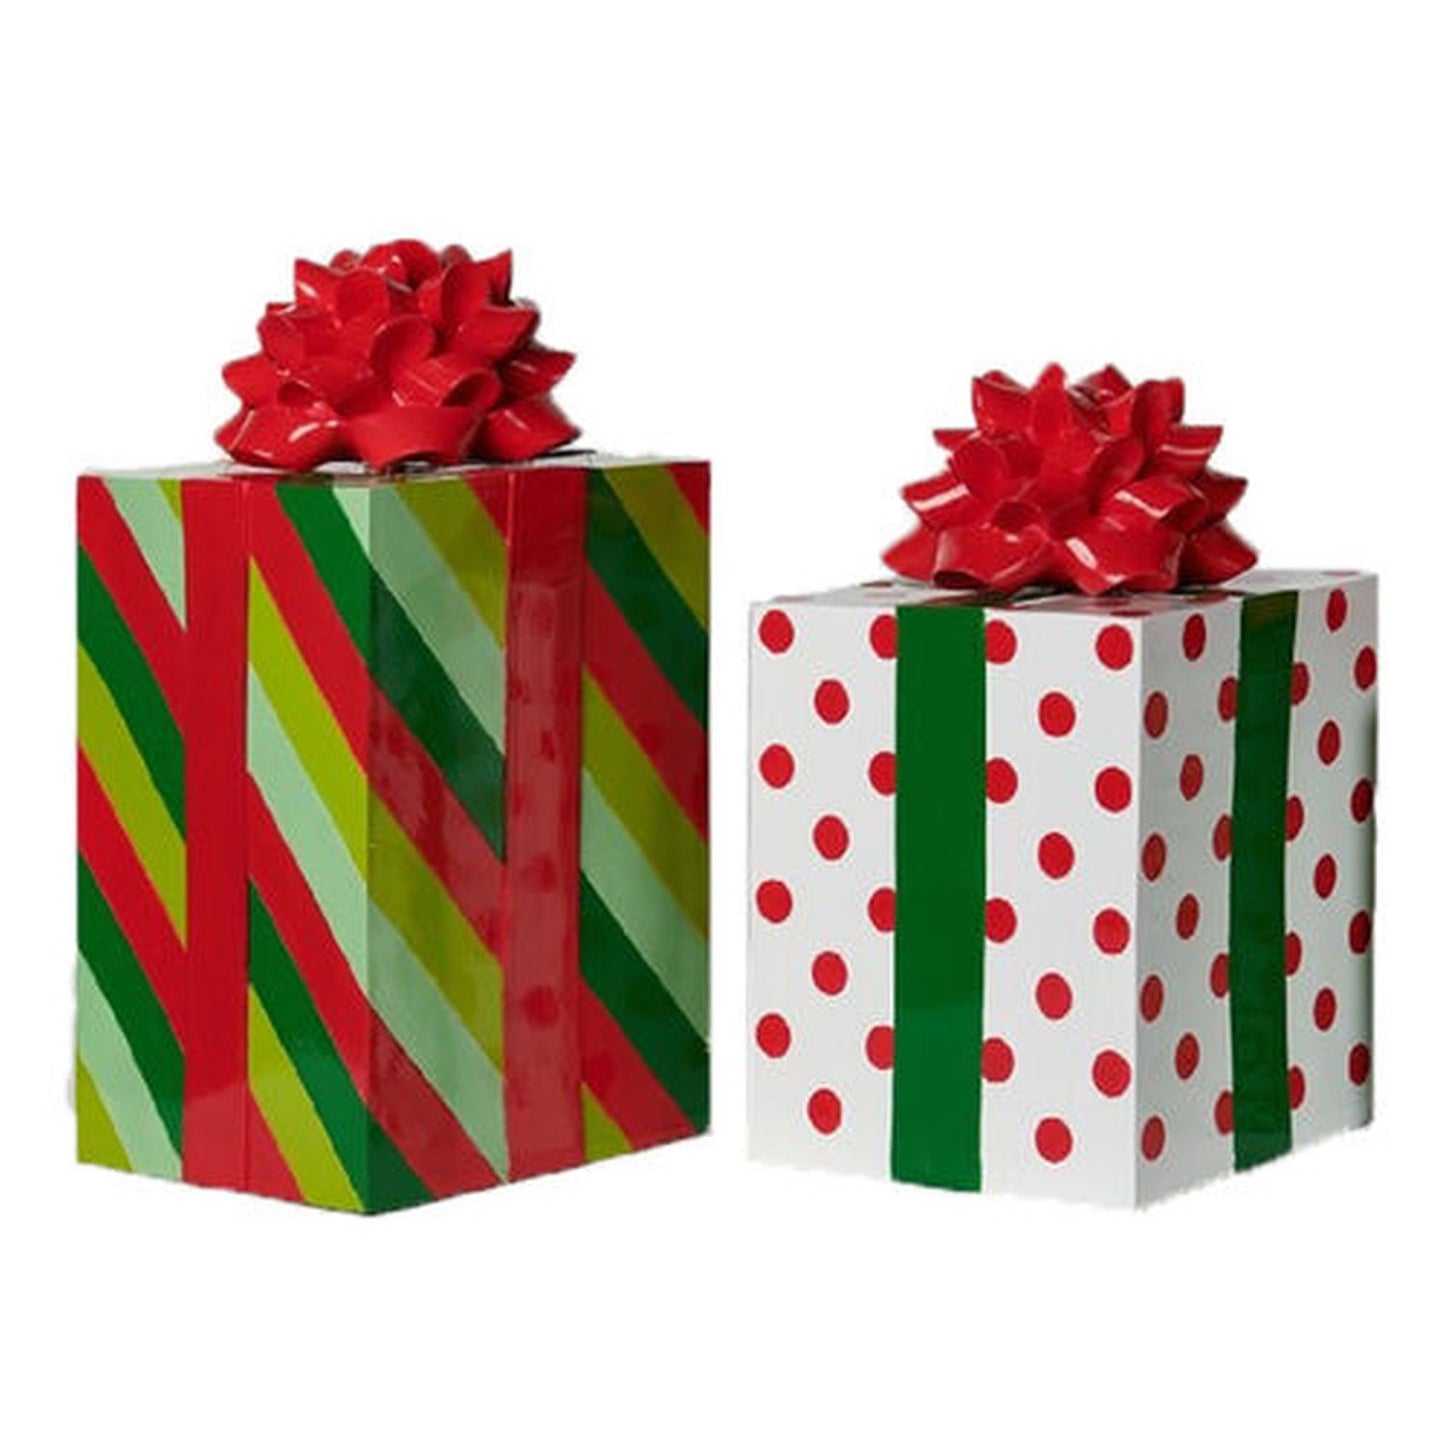 December Diamonds Christmas Carousel Set Of 2 Gift Boxes Decor Figurines